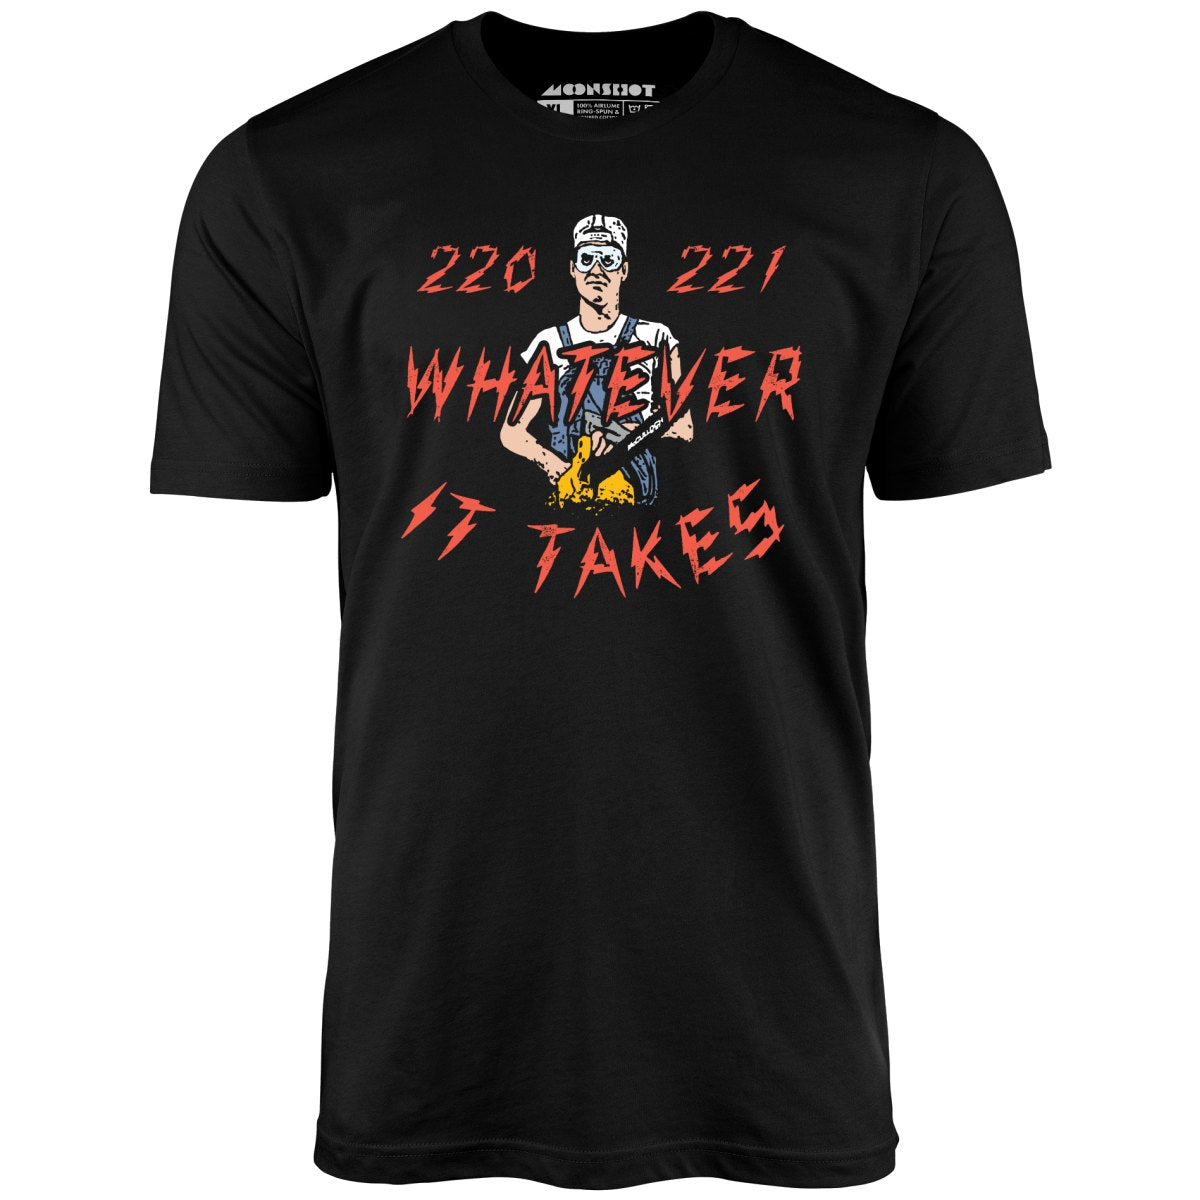 220 221 Whatever it Takes - Unisex T-Shirt